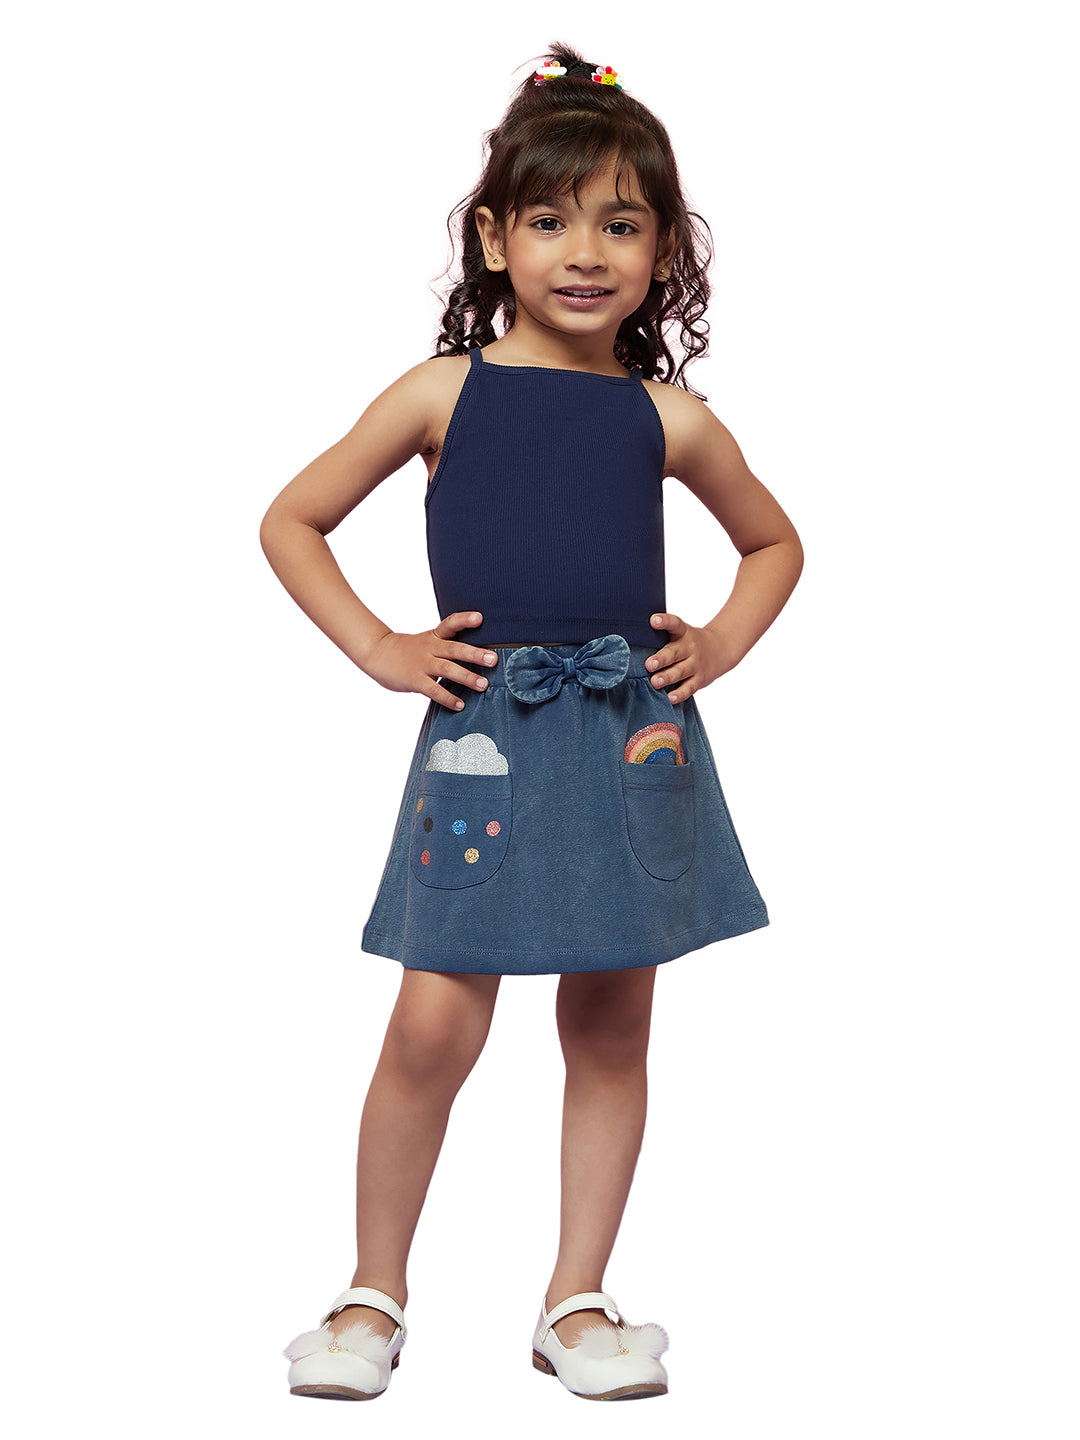 Kid Girl's Navy Blue Sleeveless Top with Blue Cloud Print Skirt